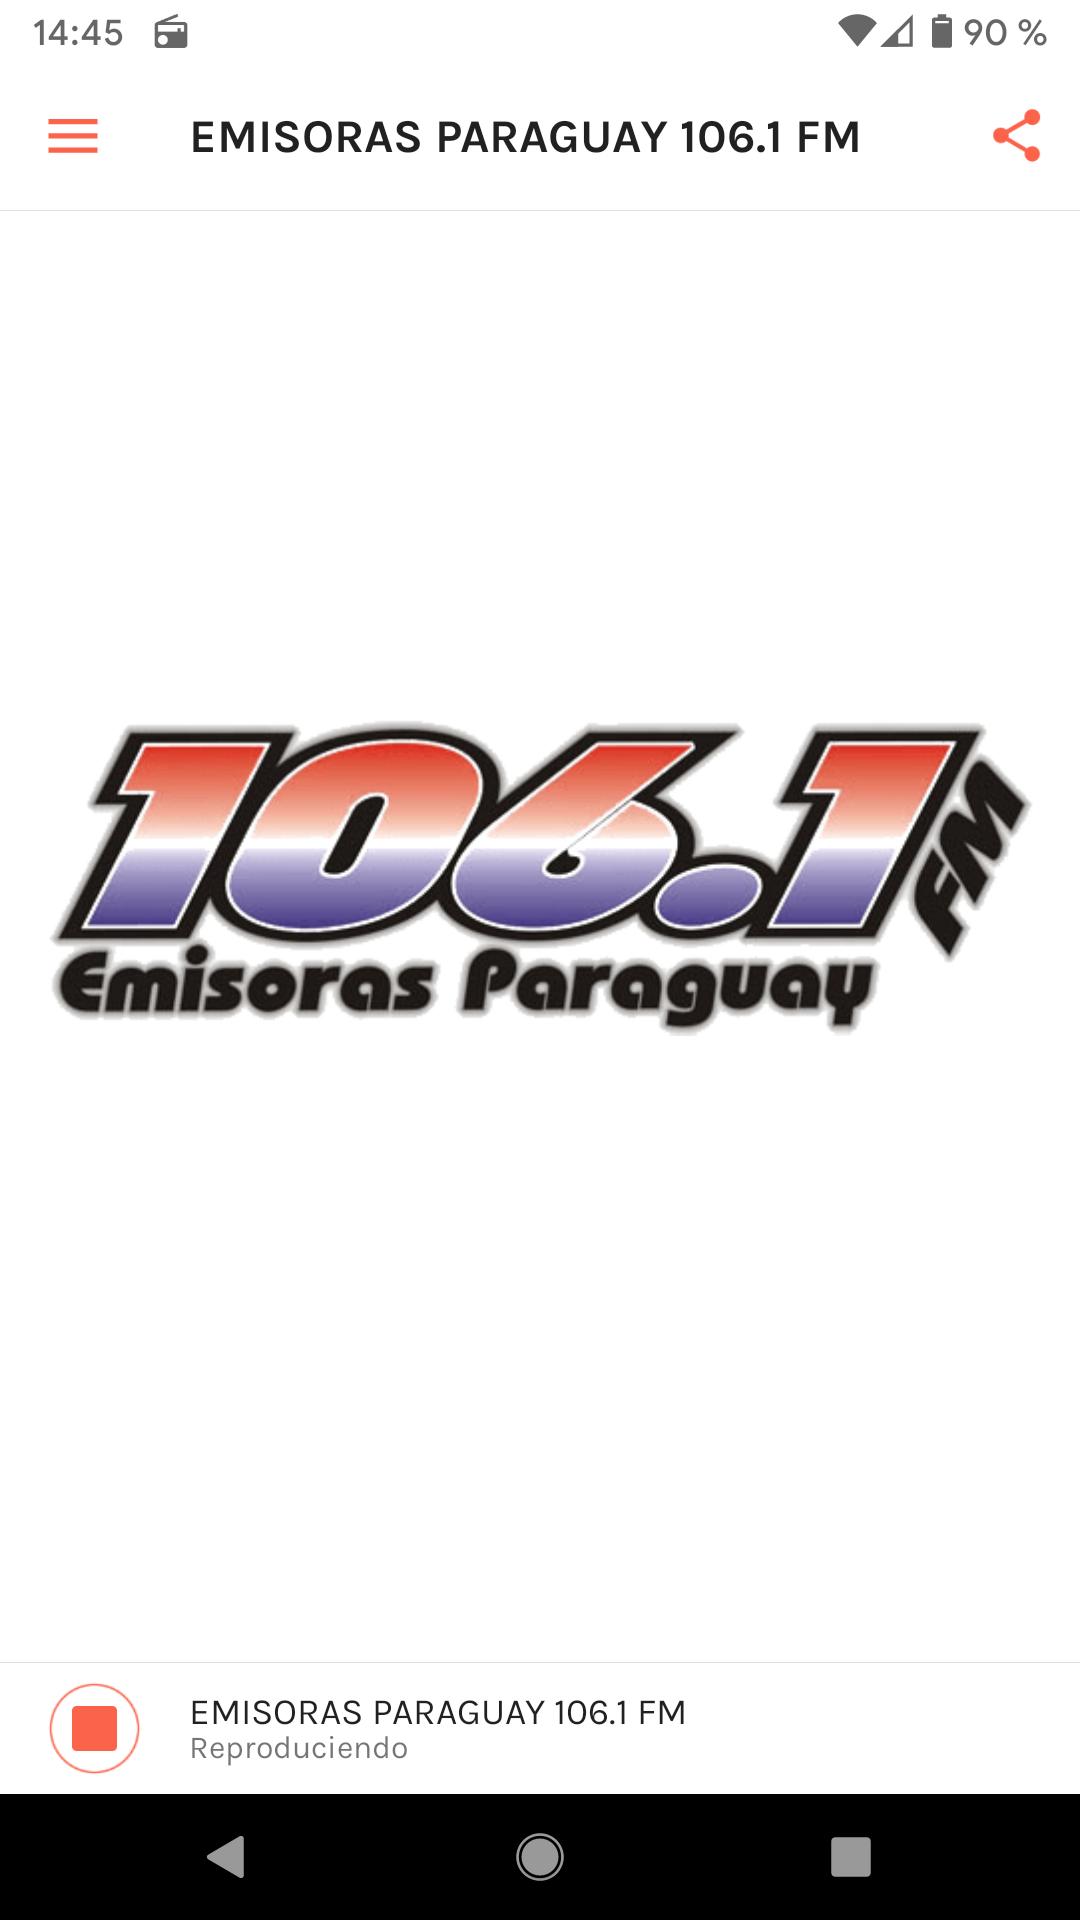 Radio Emisoras Paraguay FM APK for Android Download